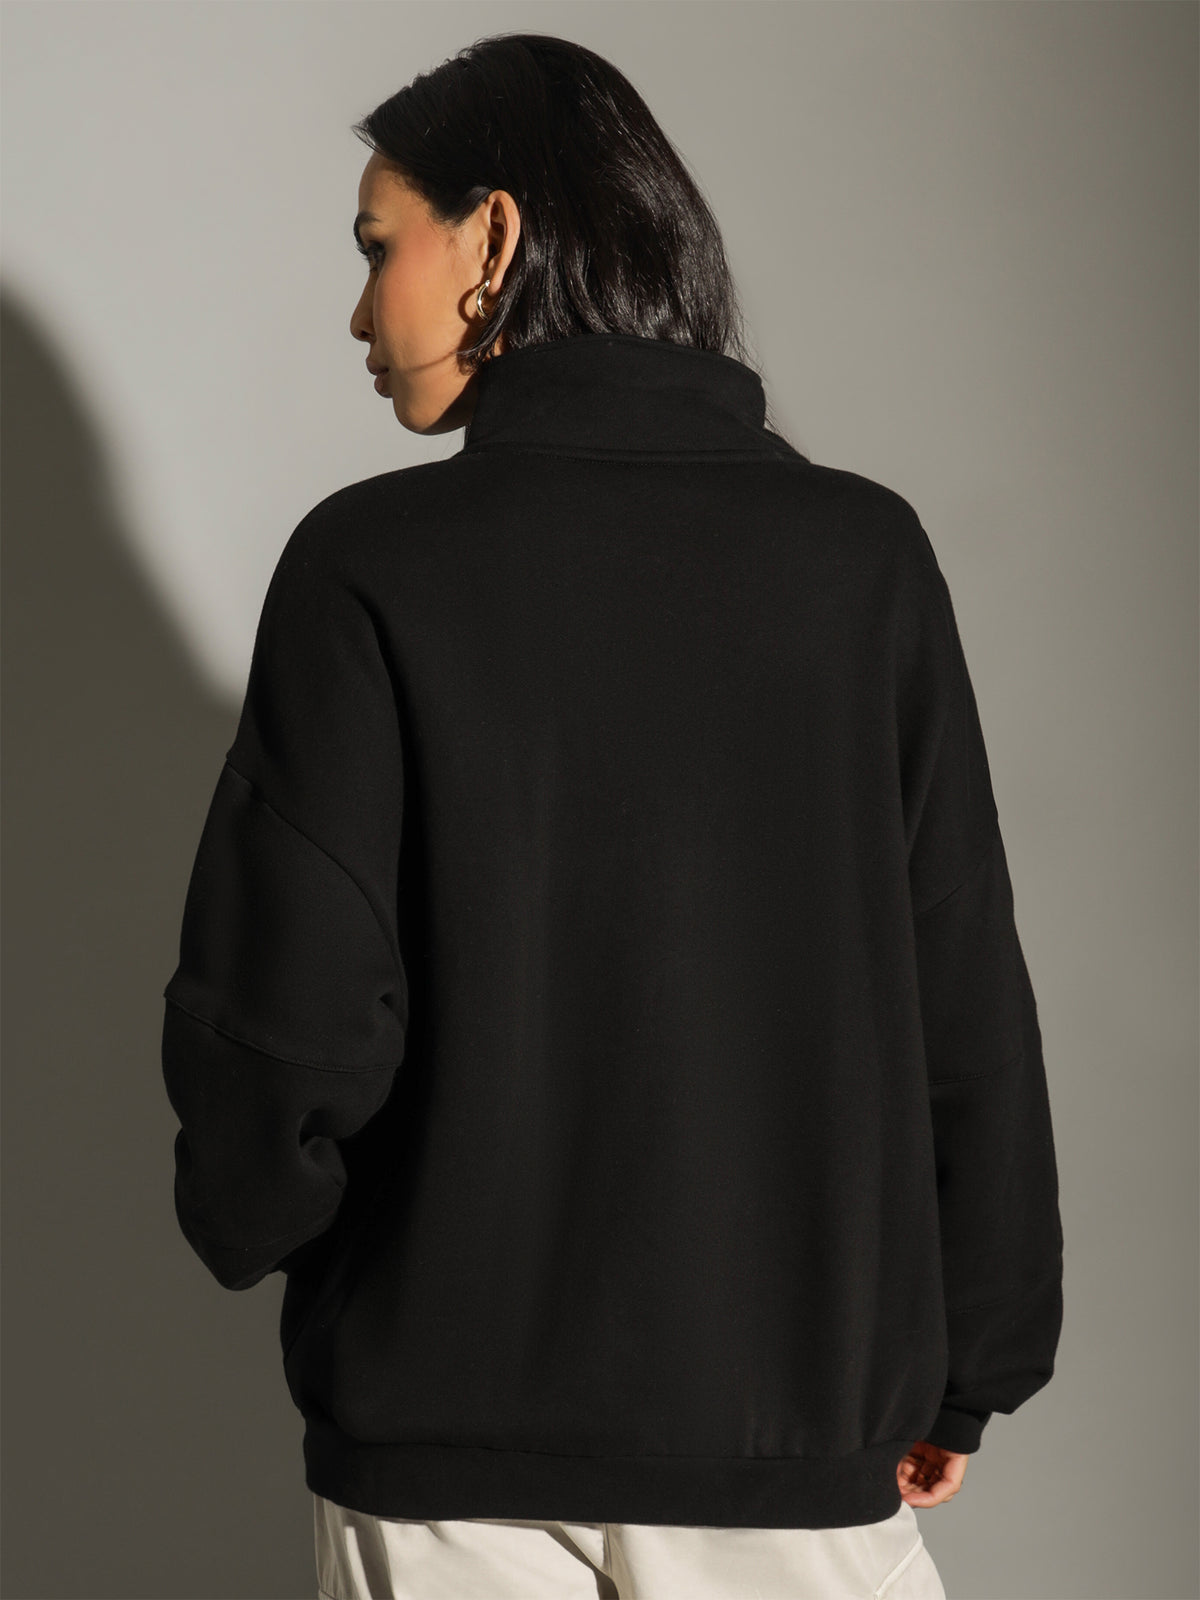 Soul Panelled 1/4 Zip Fleece in Black